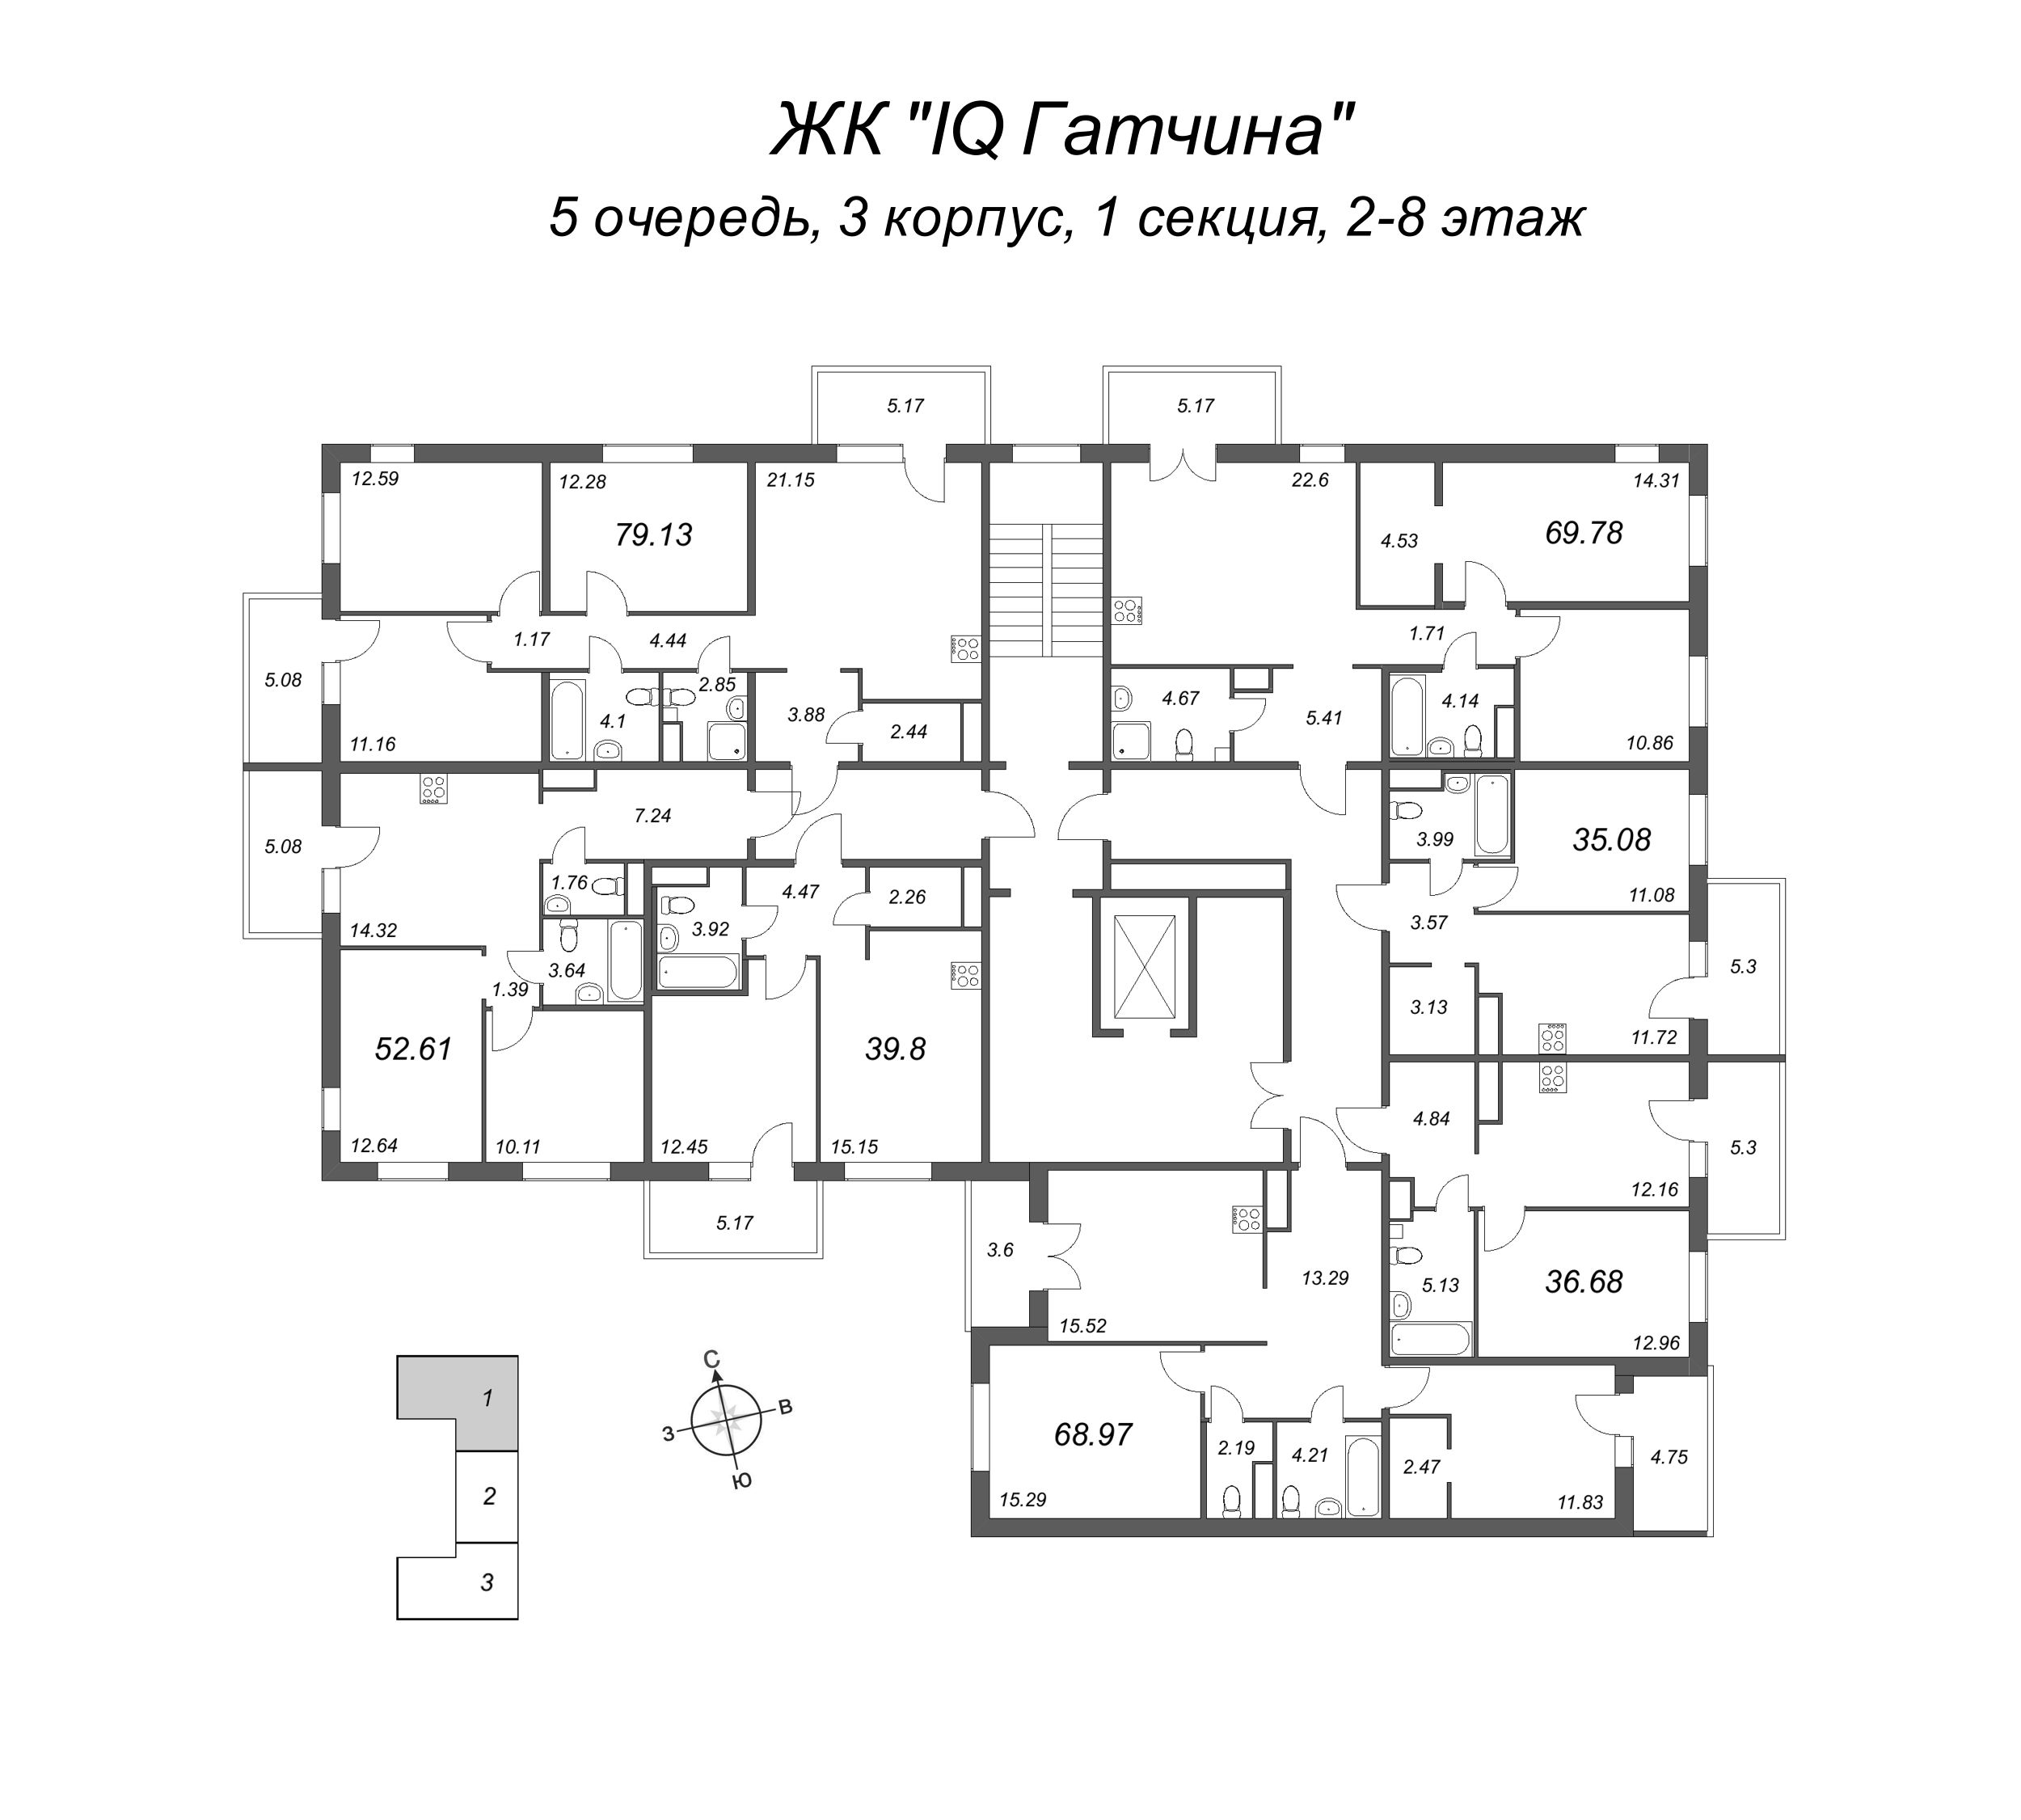 4-комнатная (Евро) квартира, 79.33 м² - планировка этажа